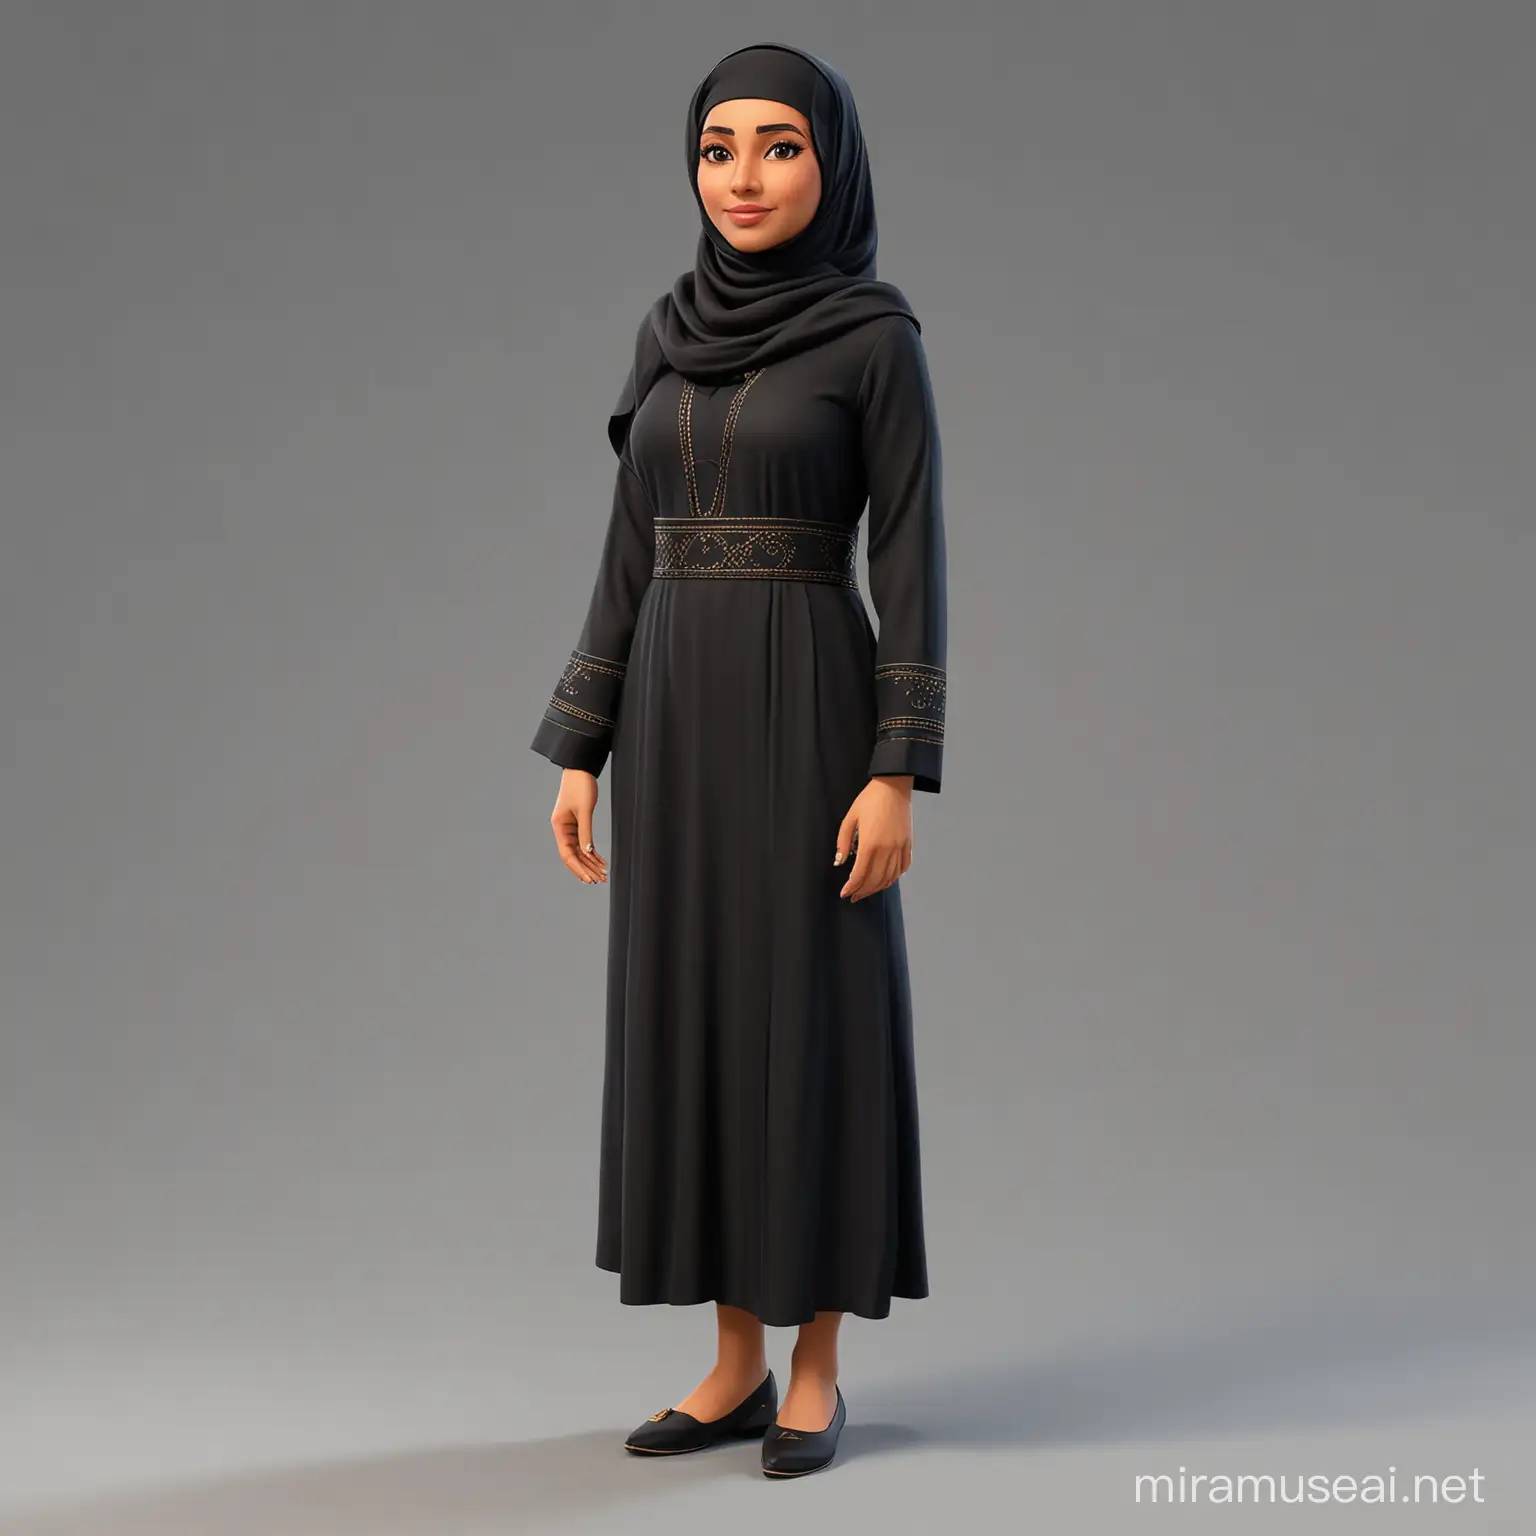 UAE Woman in Traditional Abhaya Dress 3D Cartoon Avatar